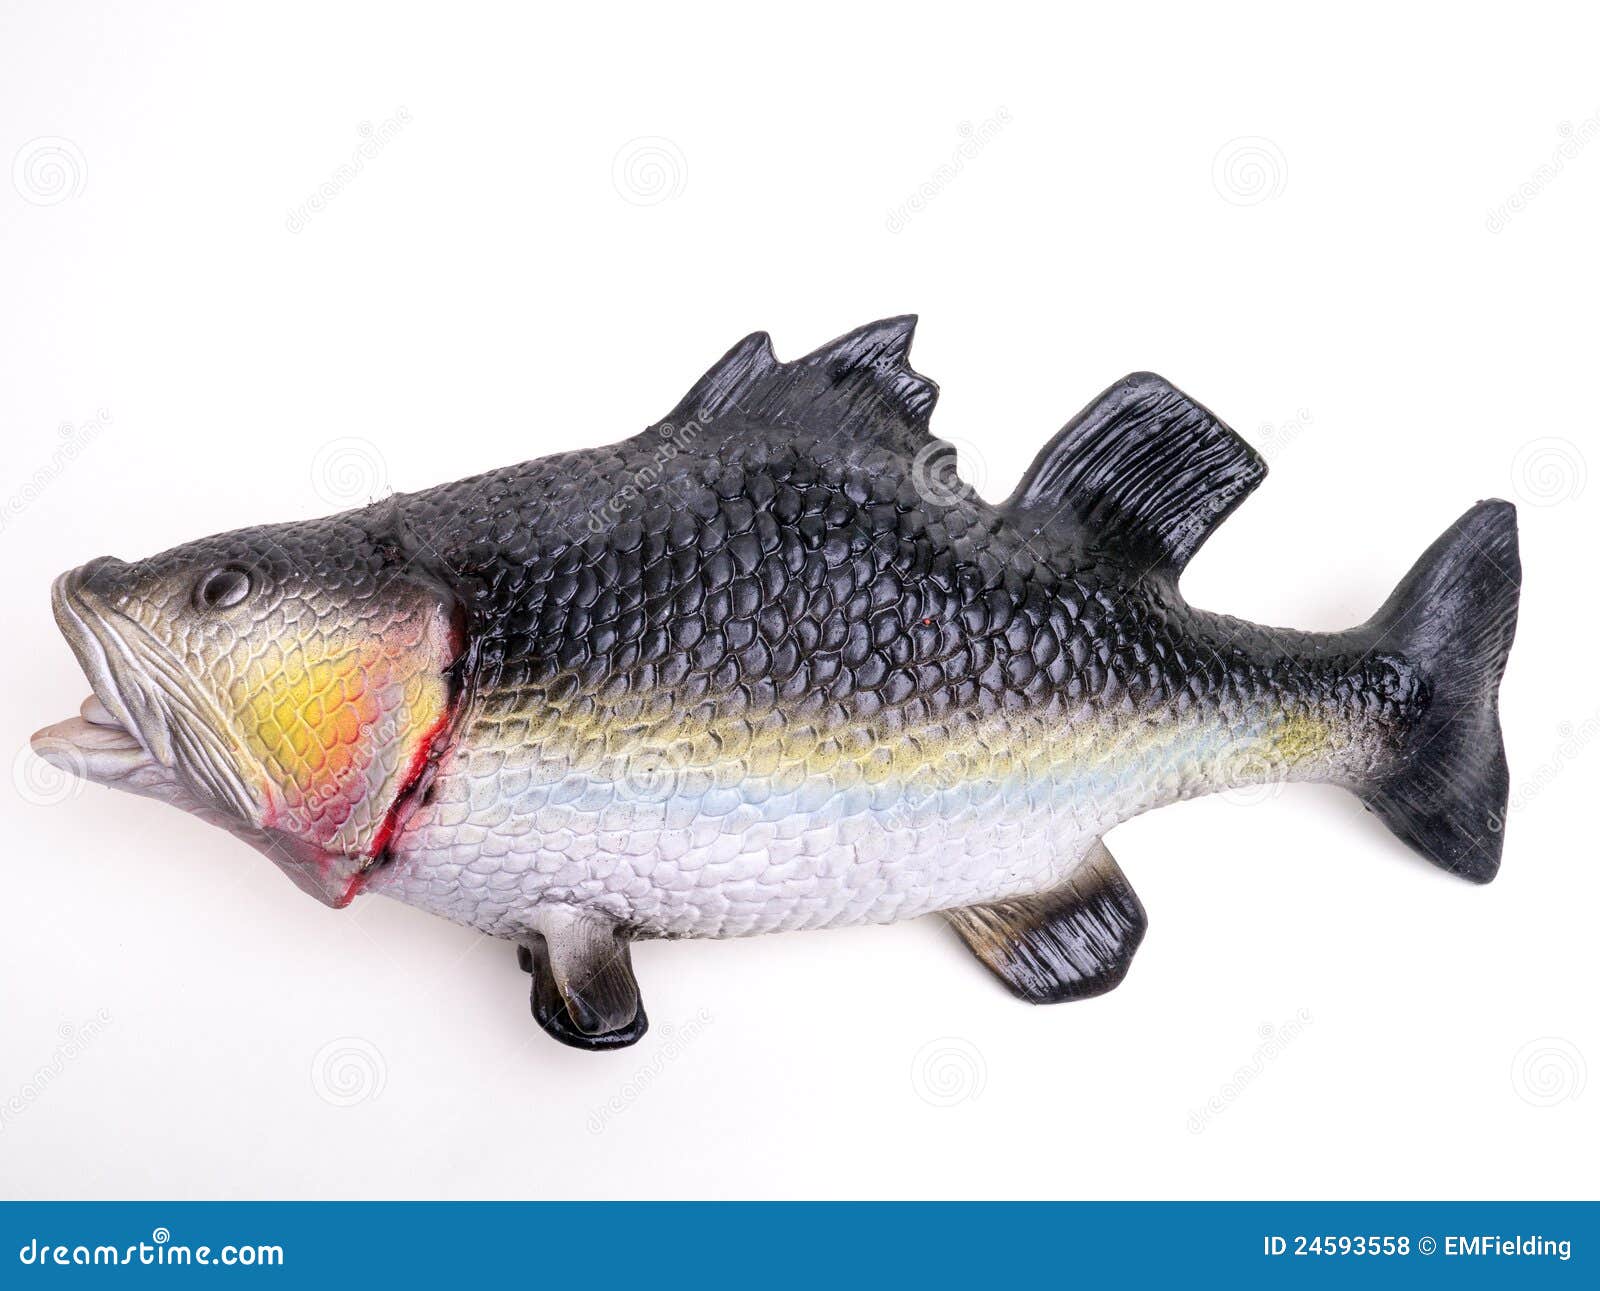 5,148 Fake Fish Stock Photos - Free & Royalty-Free Stock Photos